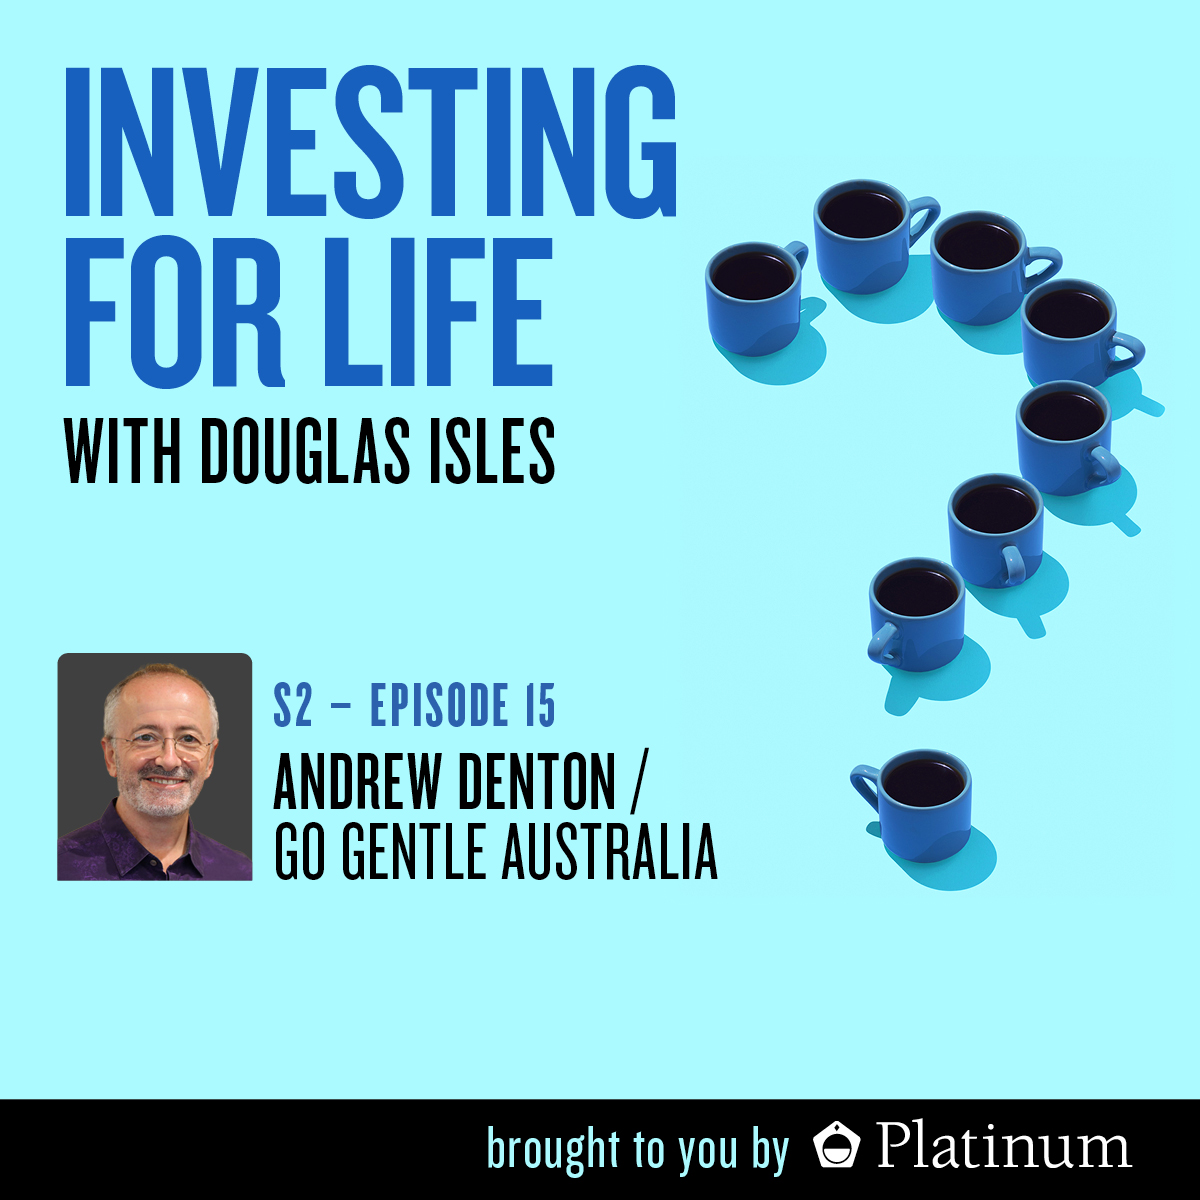 Andrew Denton, Founding Director of Go Gentle Australia.